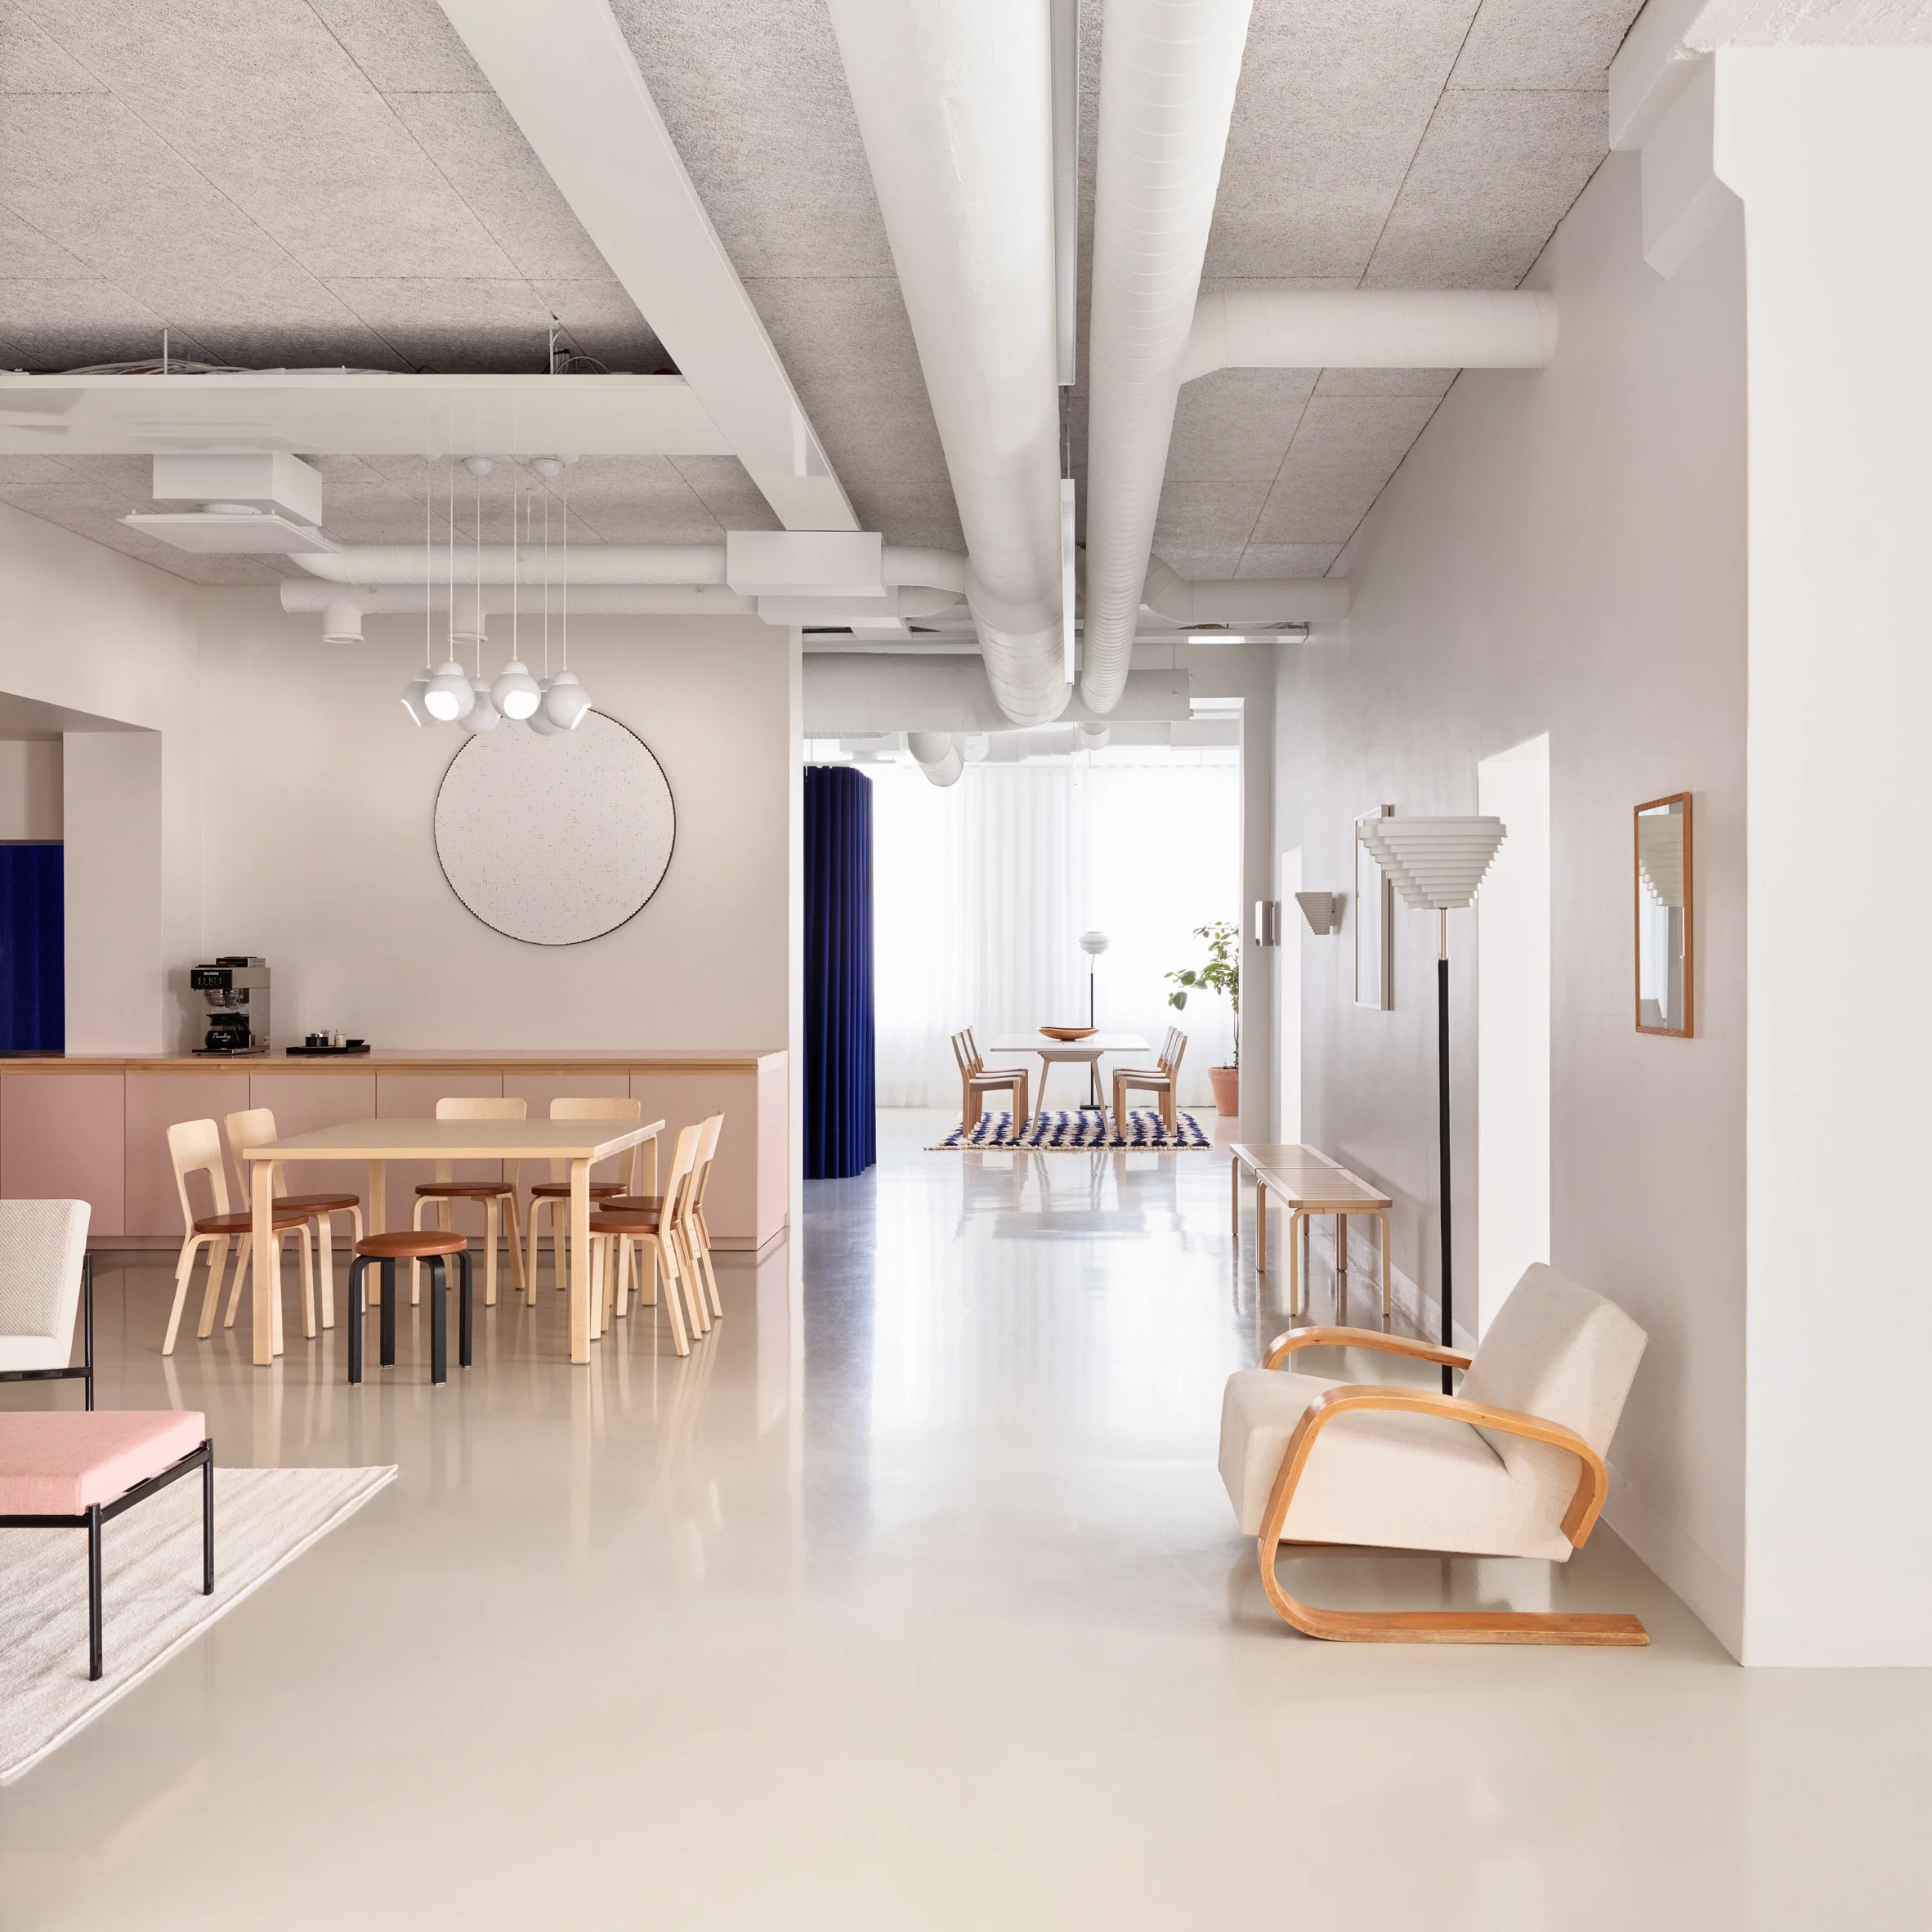 artek-hq-sevil-peach-interiors-offices-helsinki-finland_dezeen_sq-2